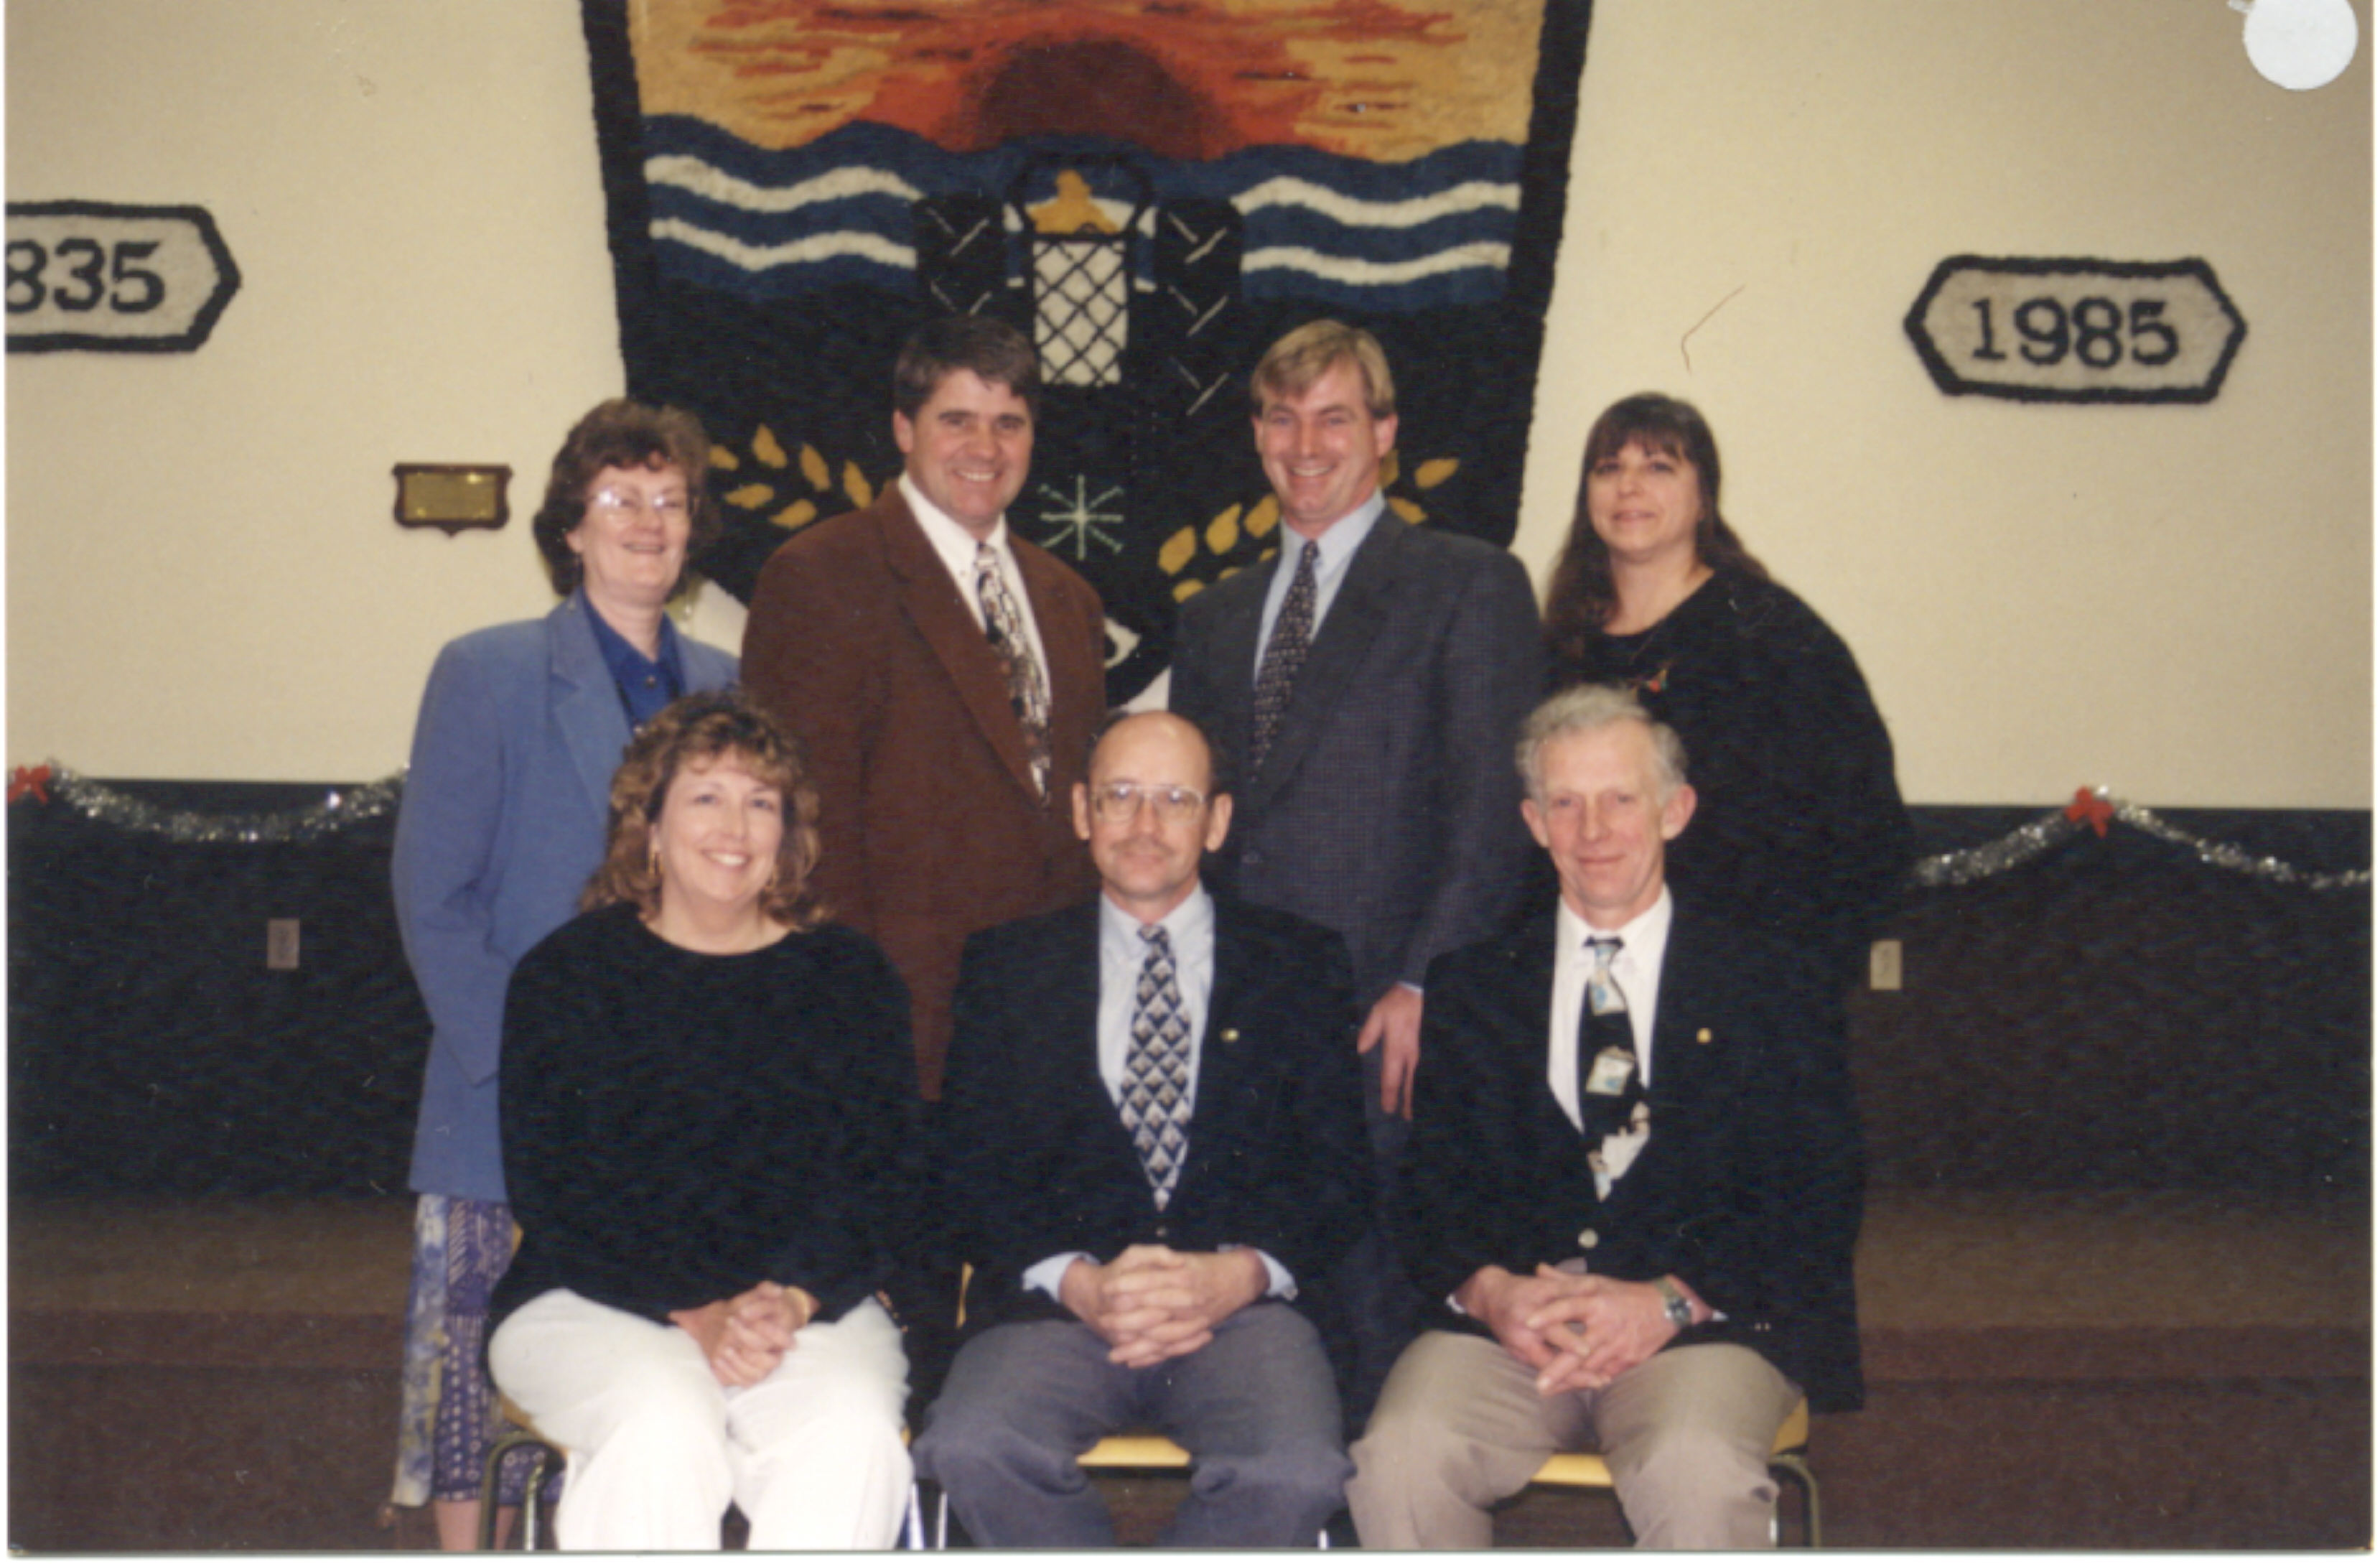 1998 Goderich Township Council Photo